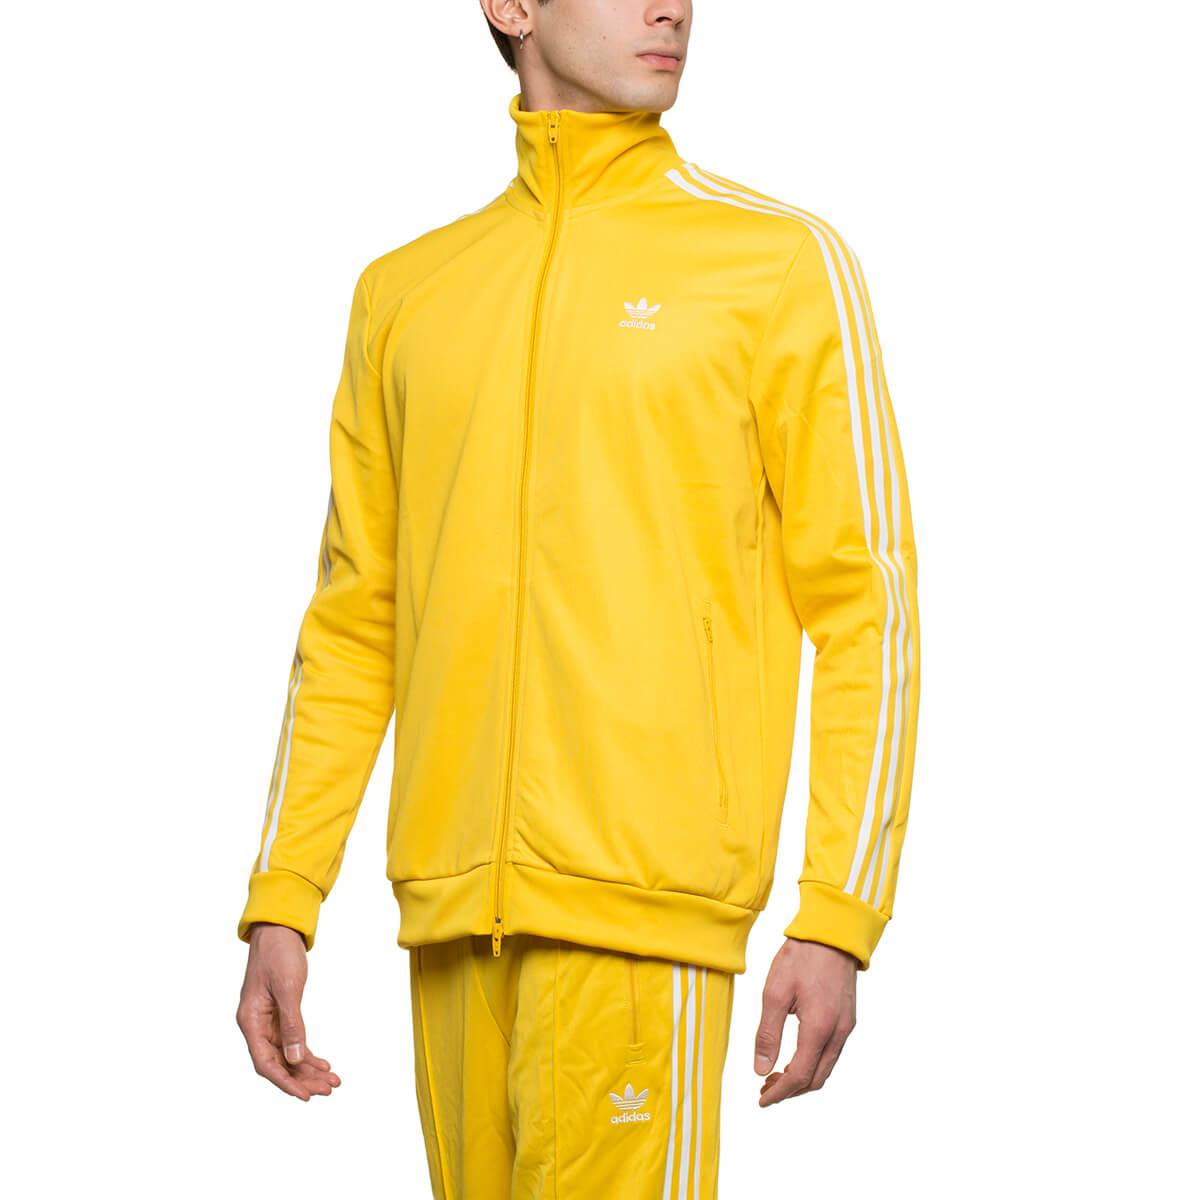 adidas Originals Cotton Firebird Track Top in Yellow for Men - Lyst